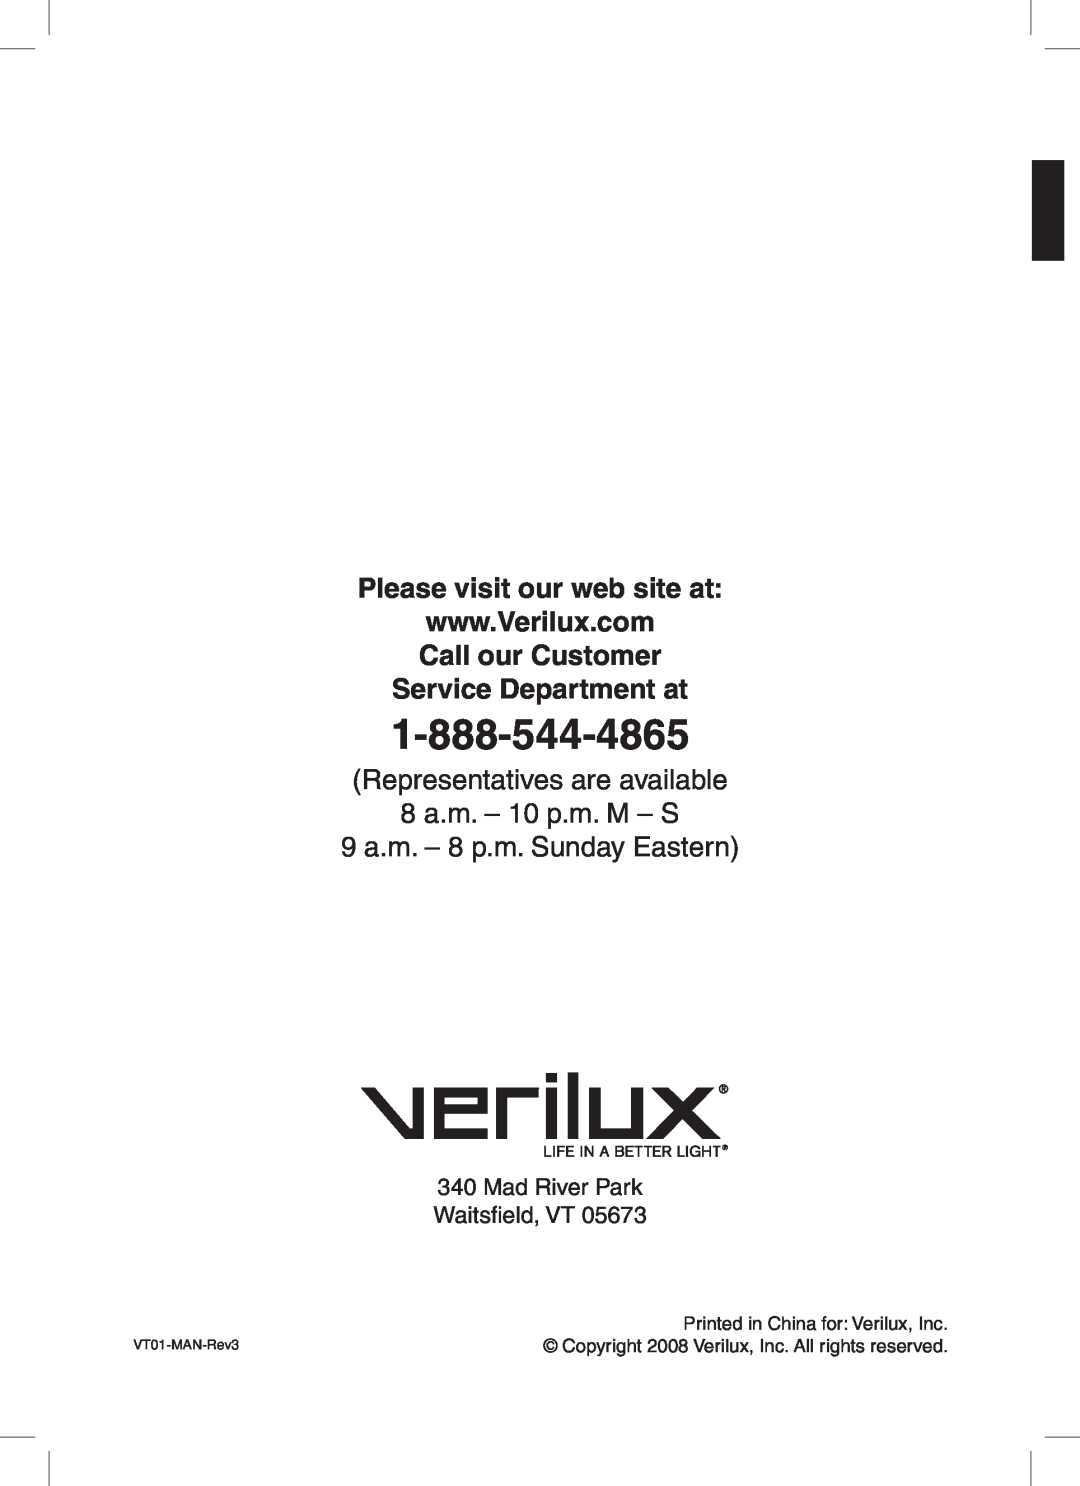 Verilux manual Please visit our web site at, Representatives are available, 8 a.m. - 10 p.m. M - S, VT01-MAN-Rev3 